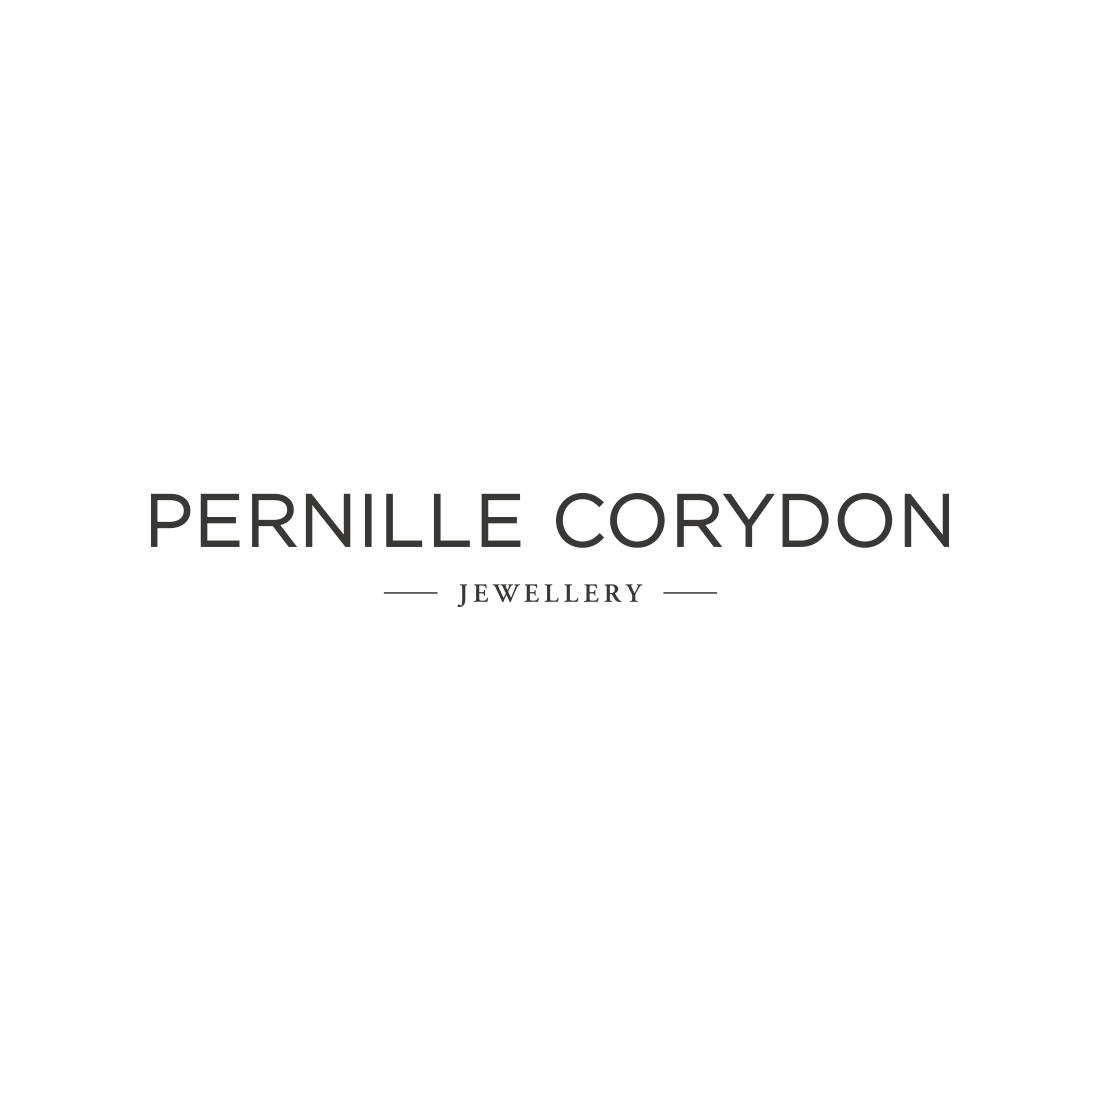 Pernille Corydon logo